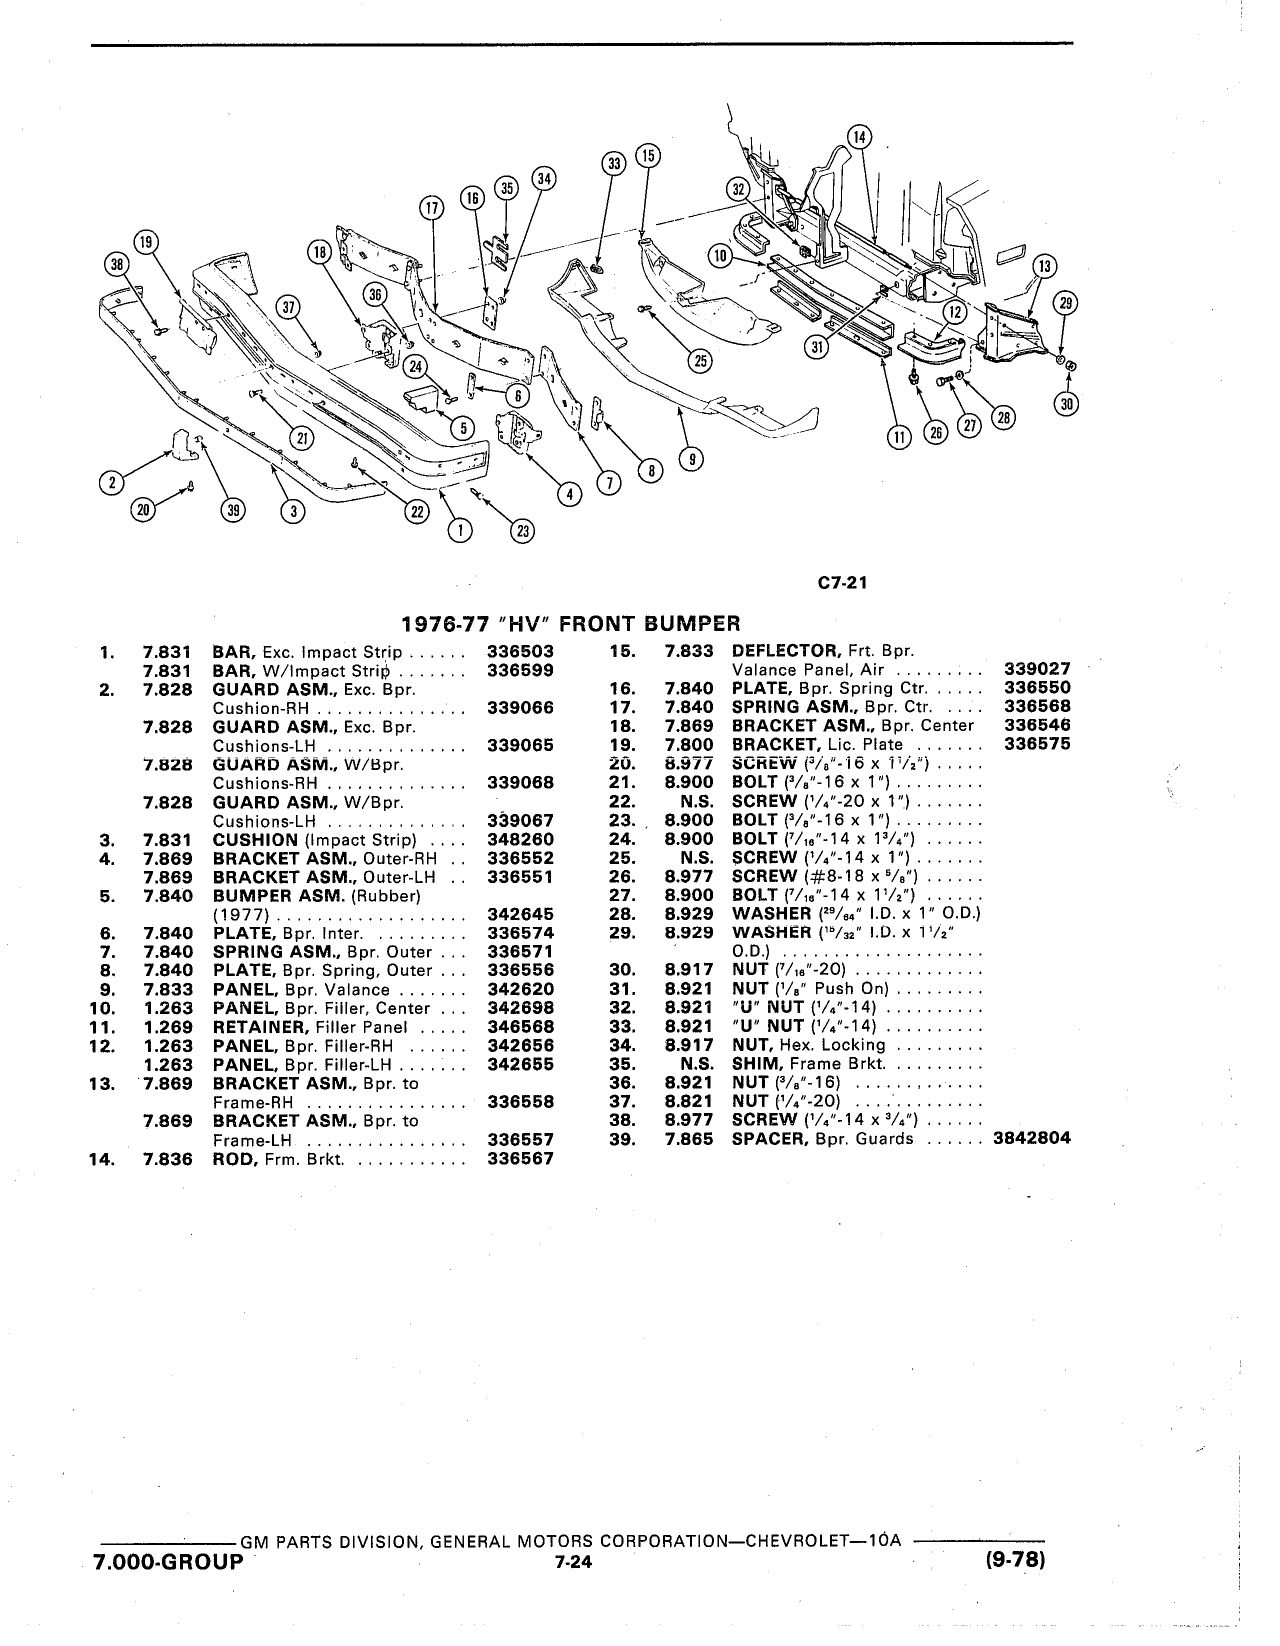 Parts Catalogue 10A September 1978